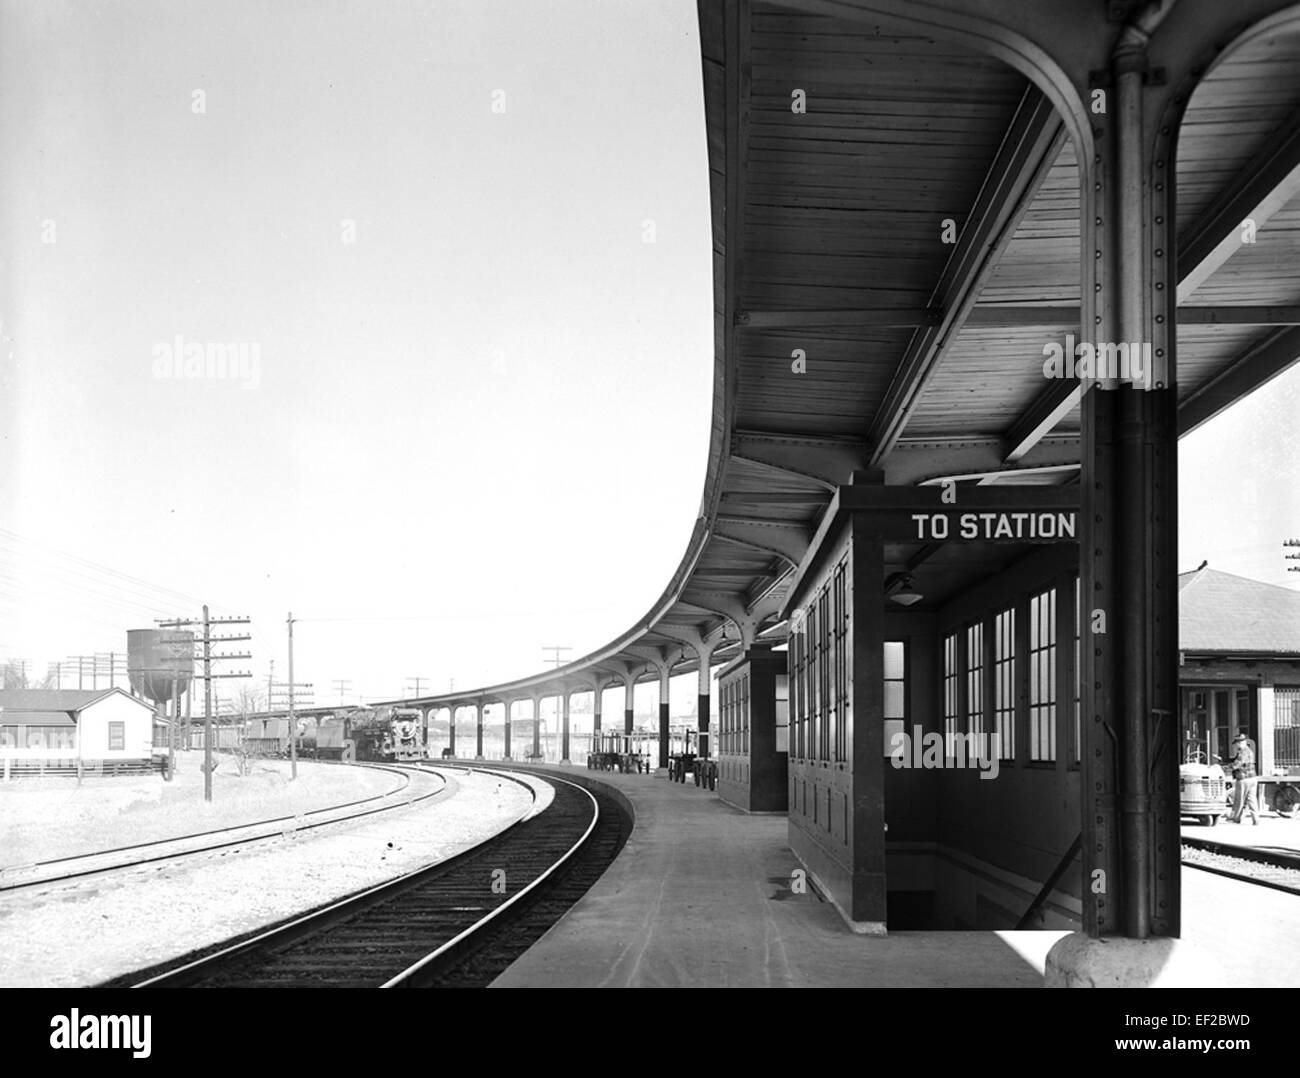 Railway station, Wacol, 1967. Wacol is 18 km south west of